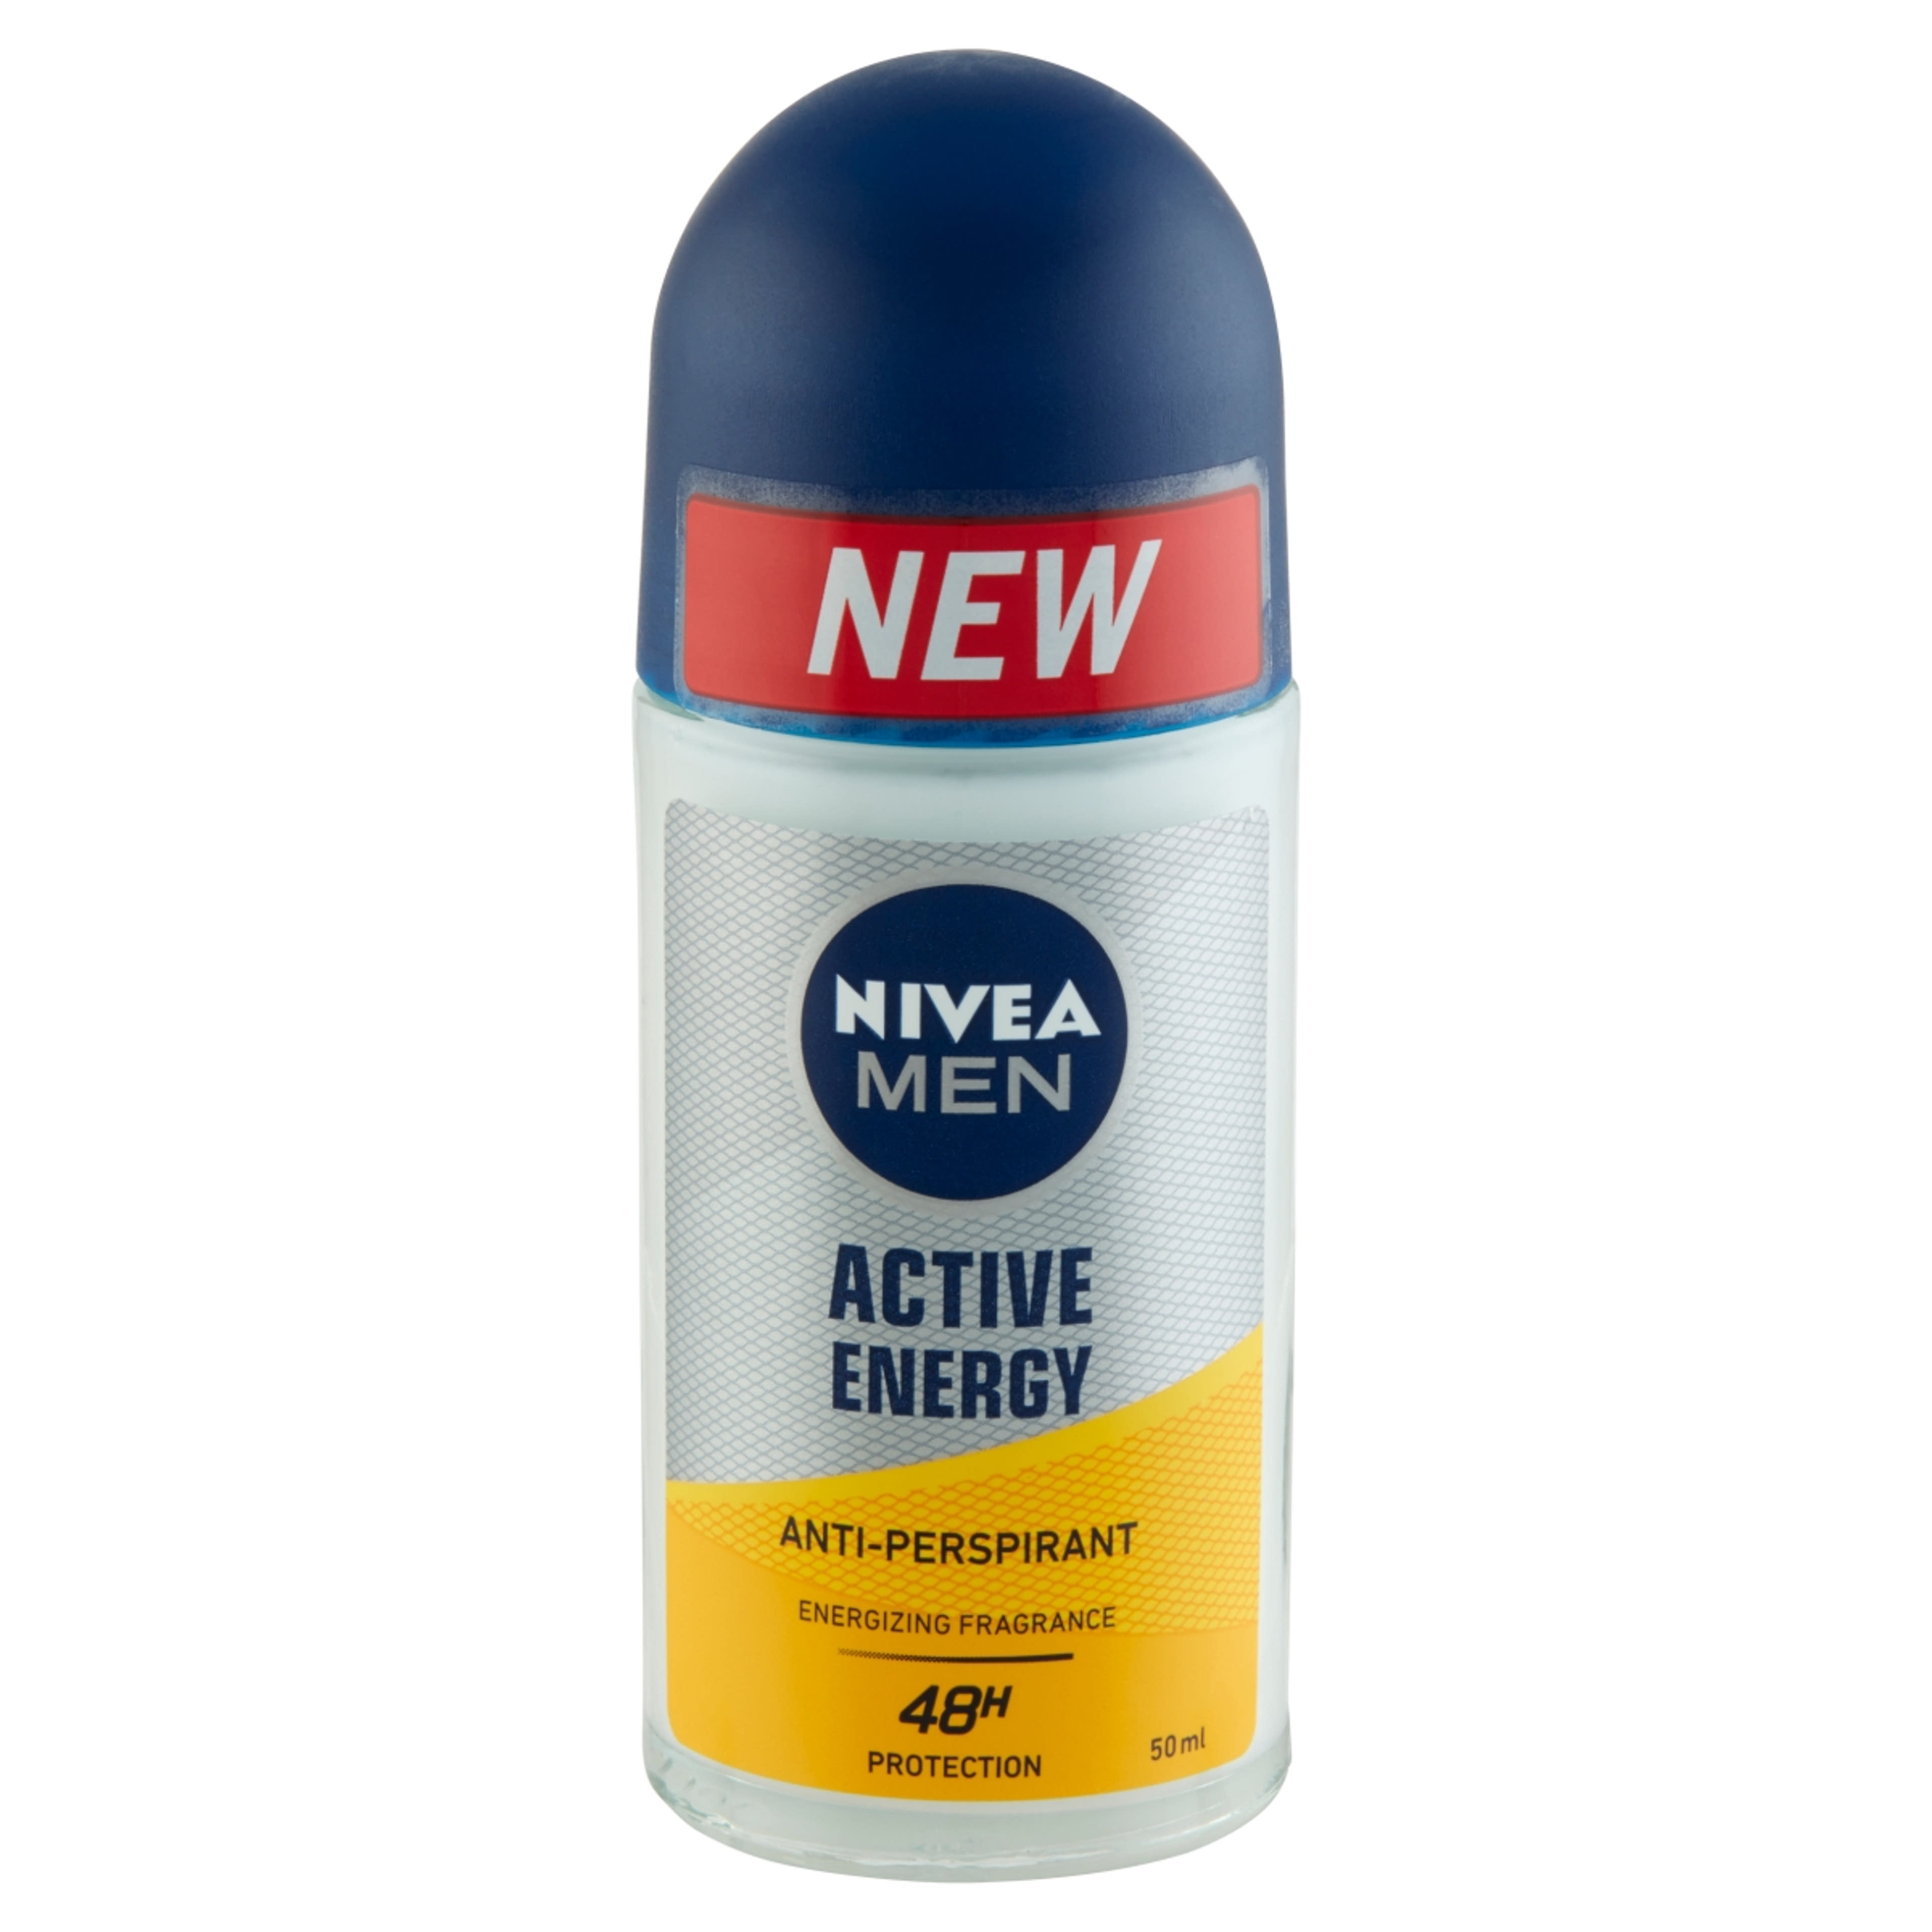 NIVEA MEN roll-on active energy - 50 ml-2